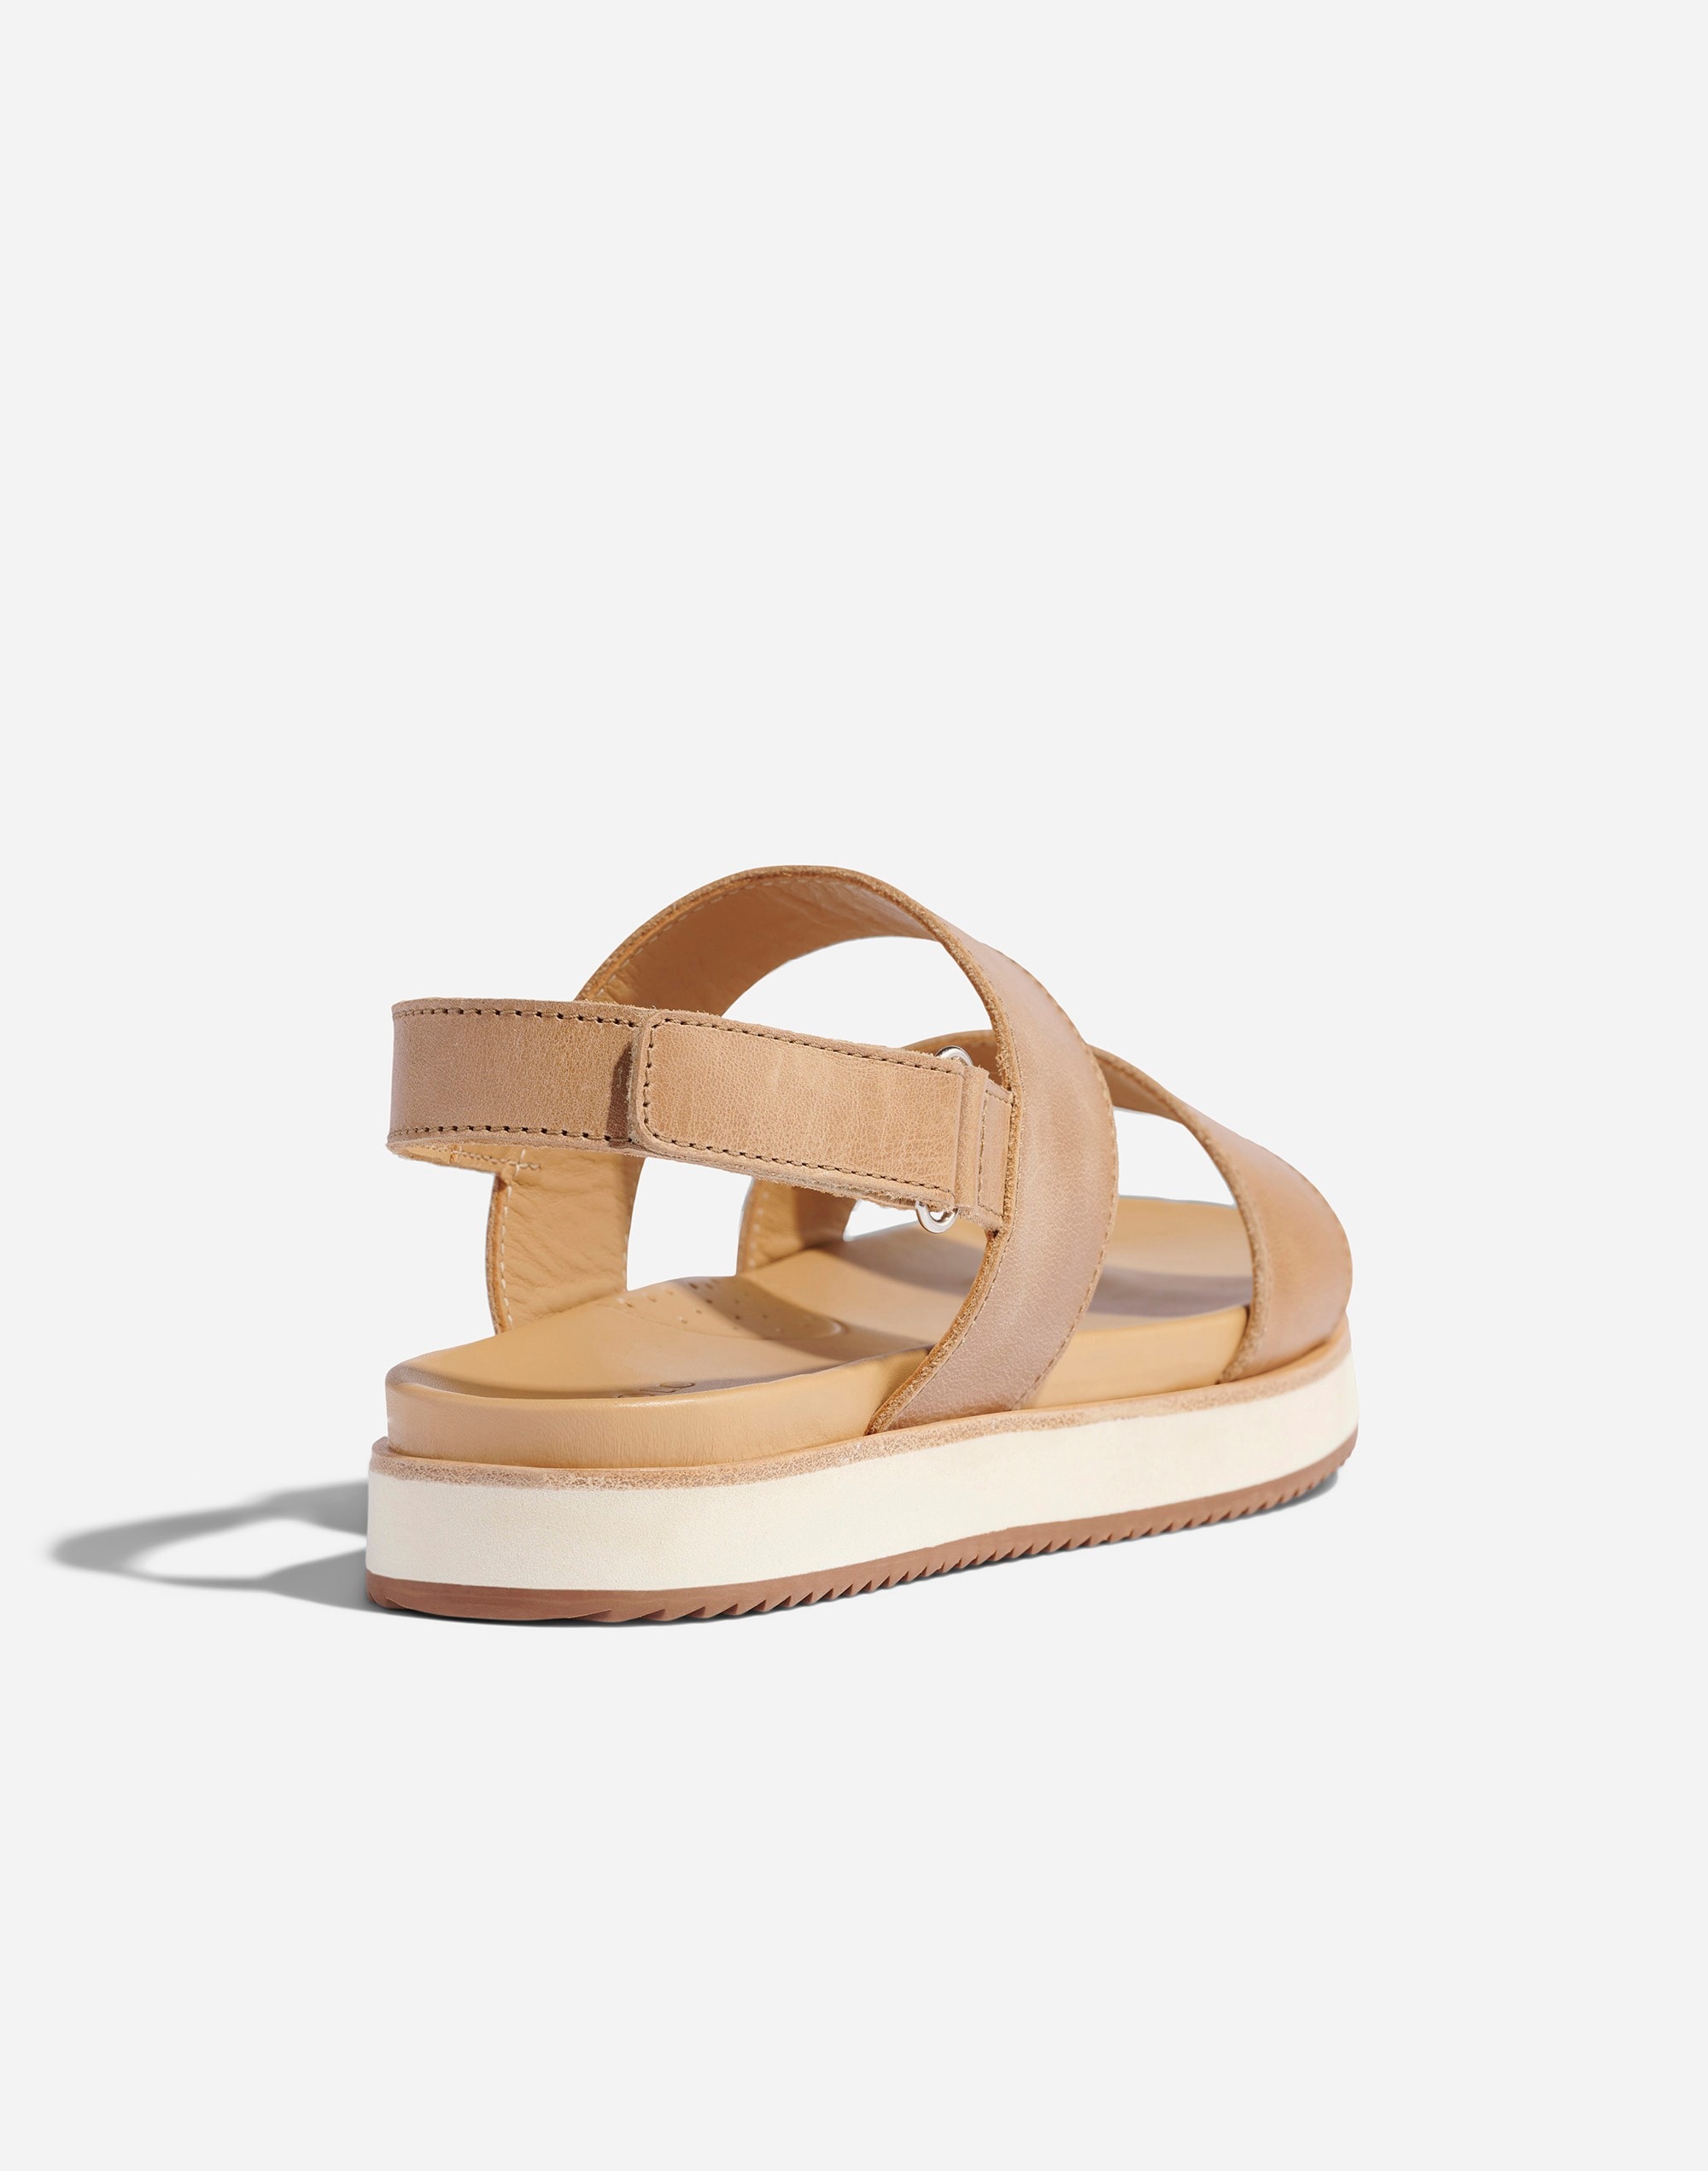 Nisolo Go-To Flatform Sandal